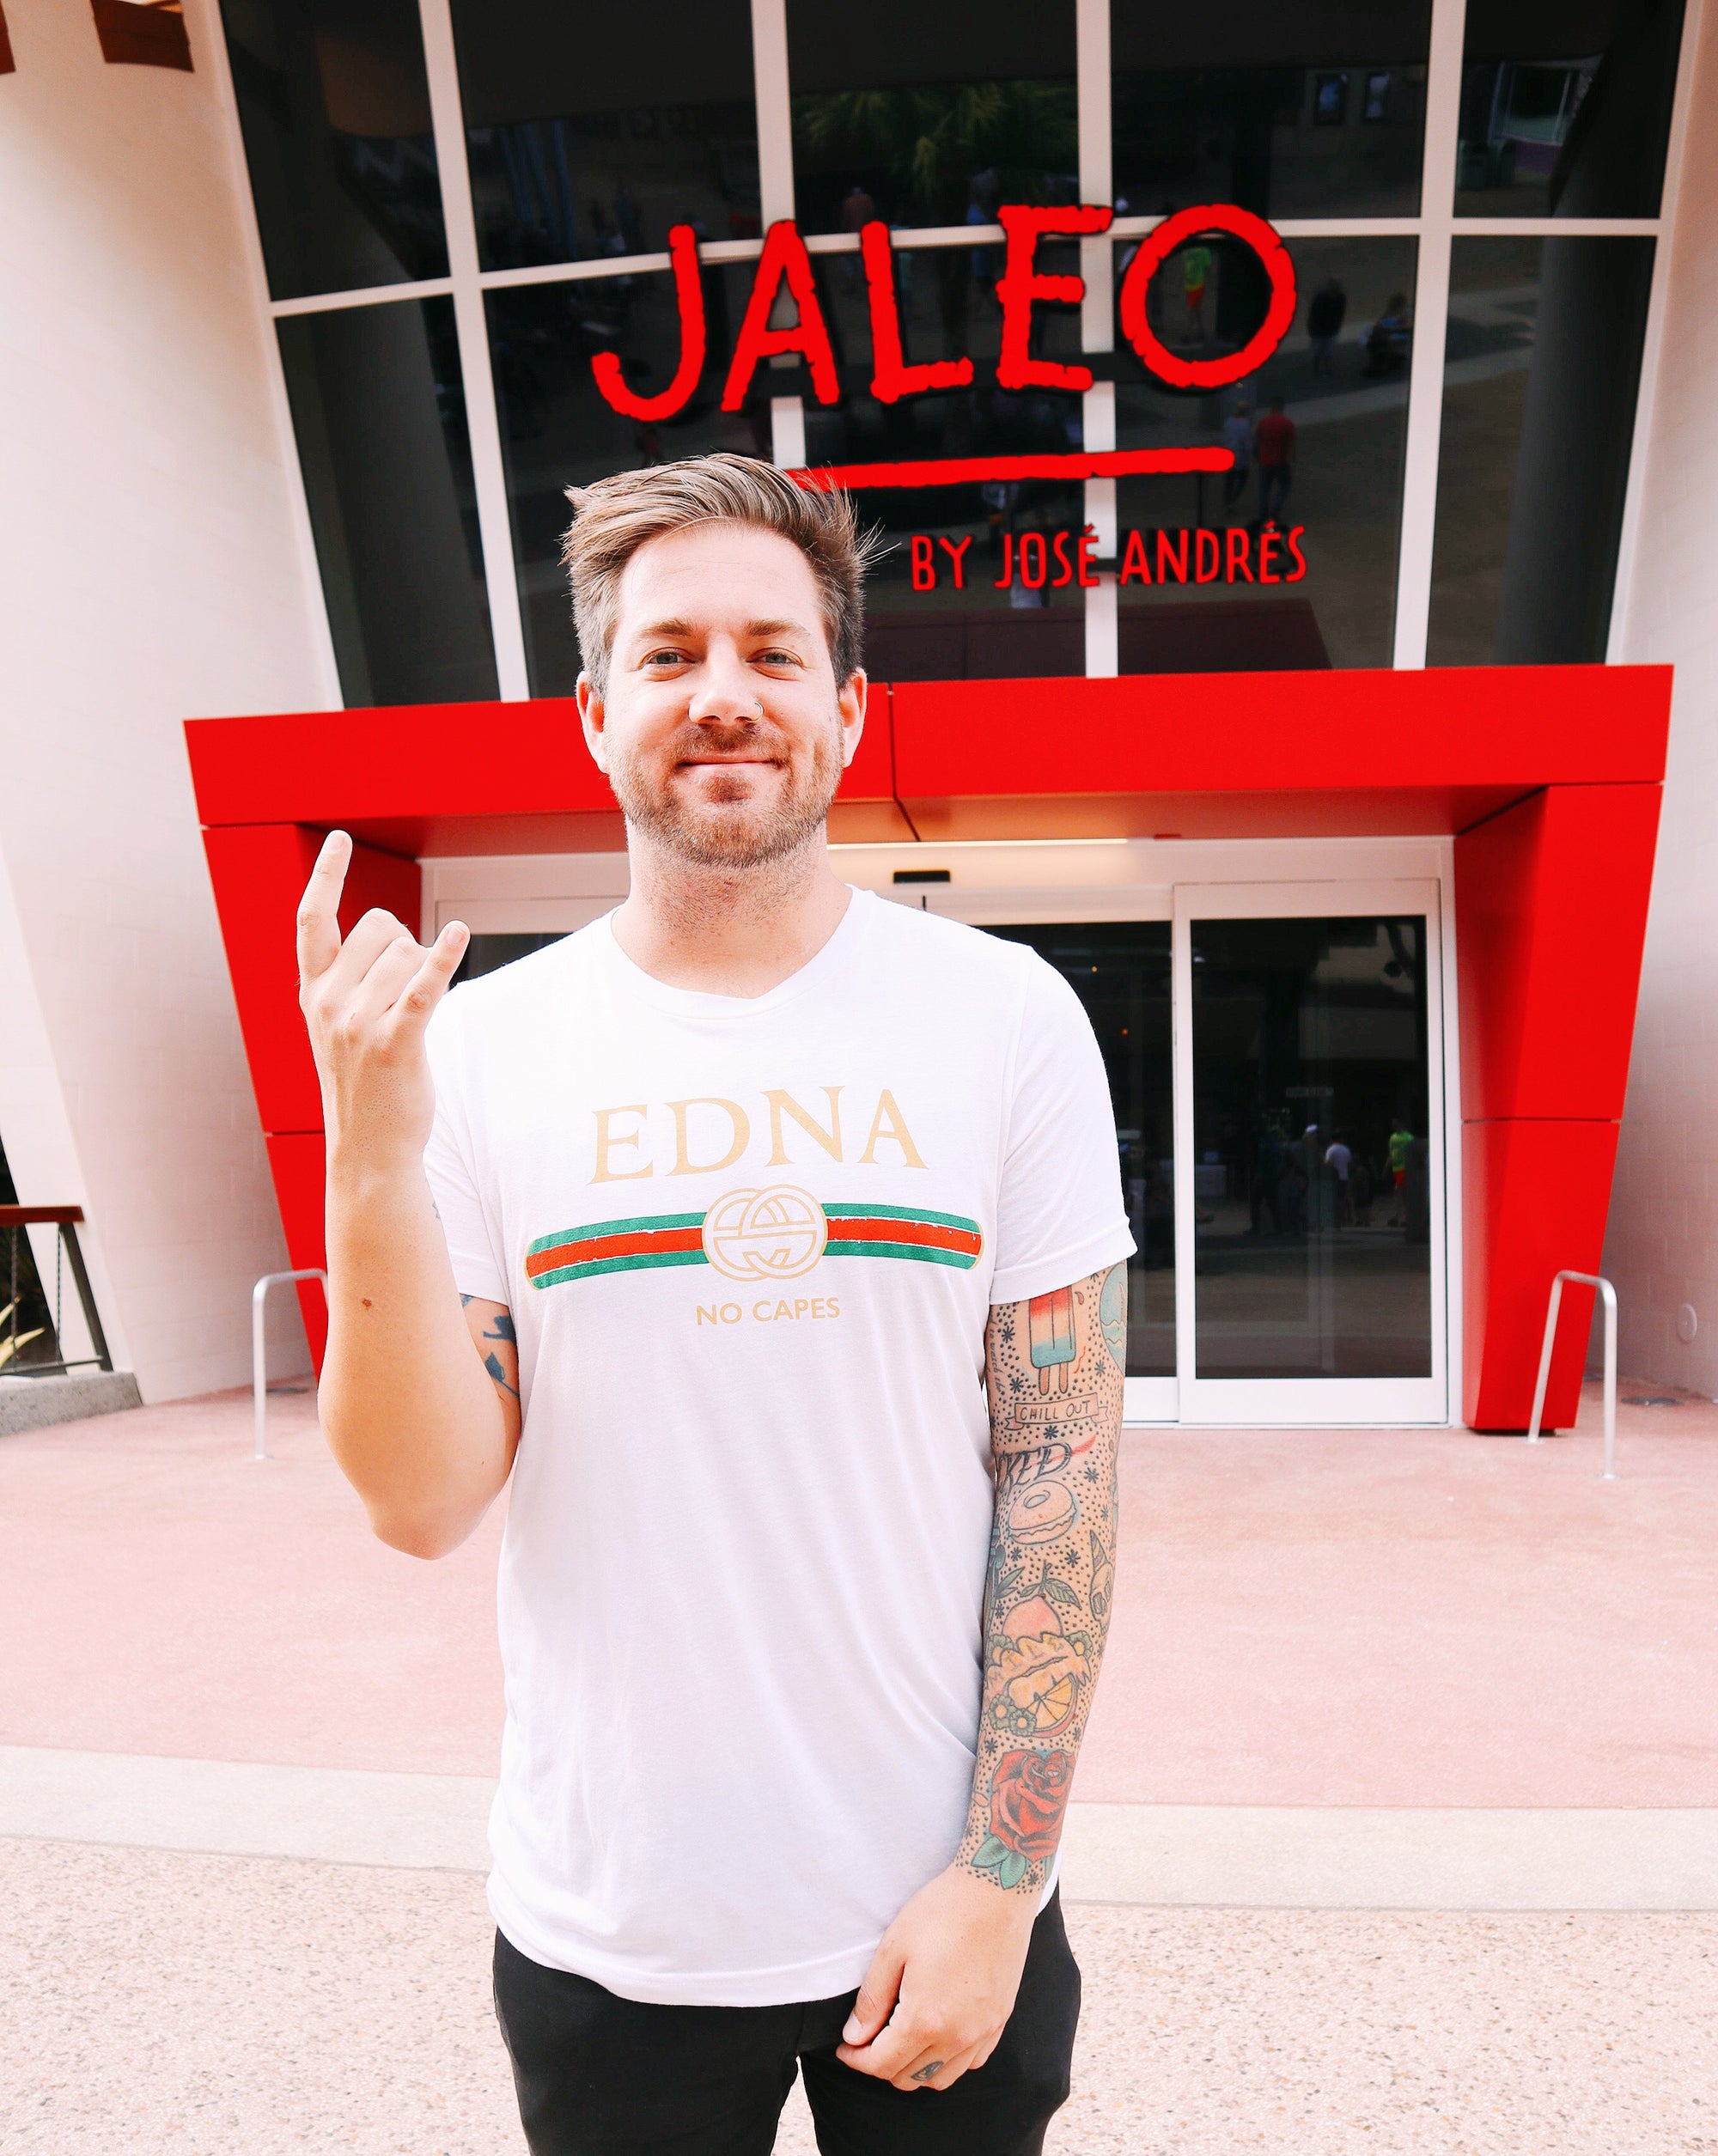 Jaleo by José Andrés at Disney Springs